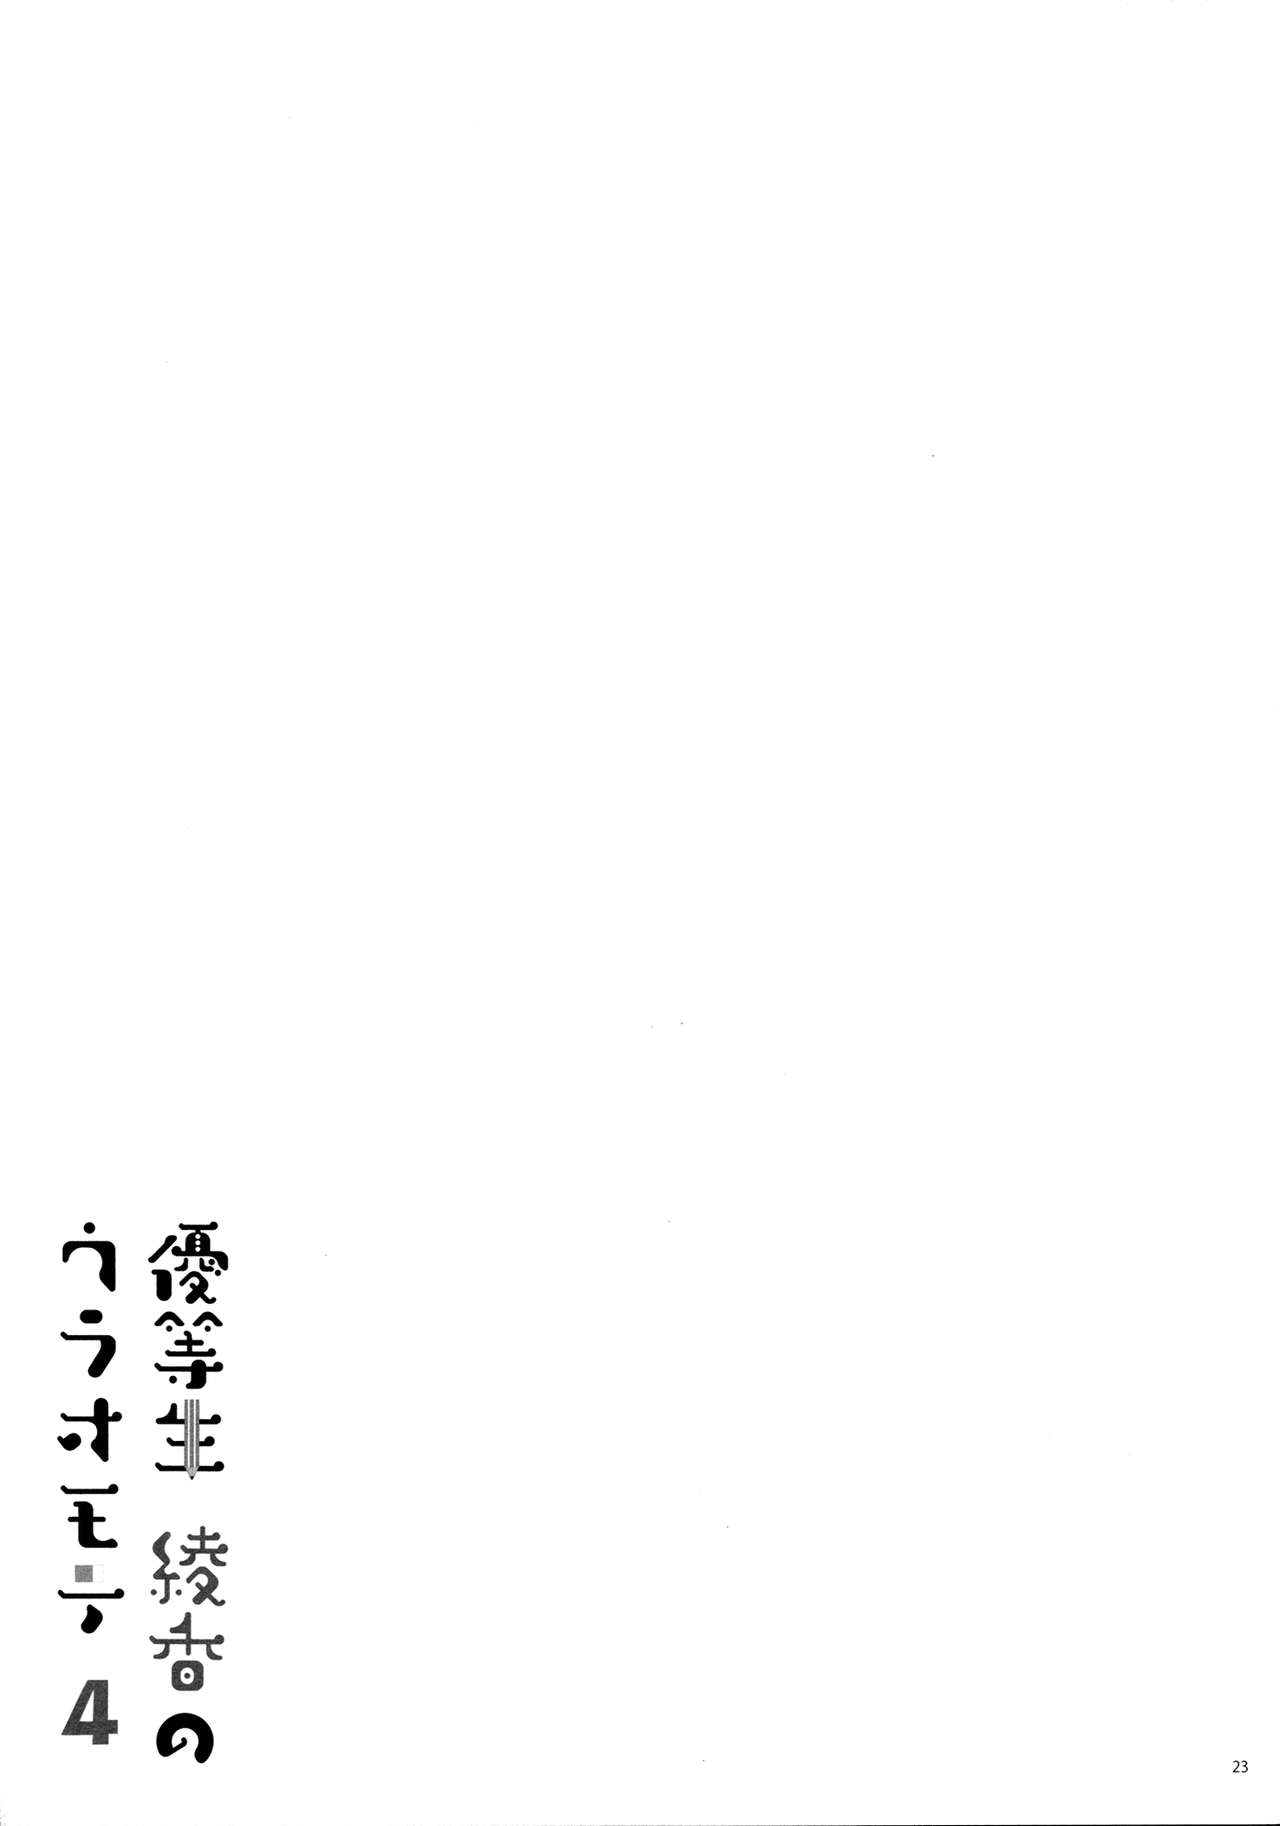 (COMIC1☆11) [moco chouchou (ひさまくまこ)] 優等生 綾香のウラオモテ 4 [英訳]